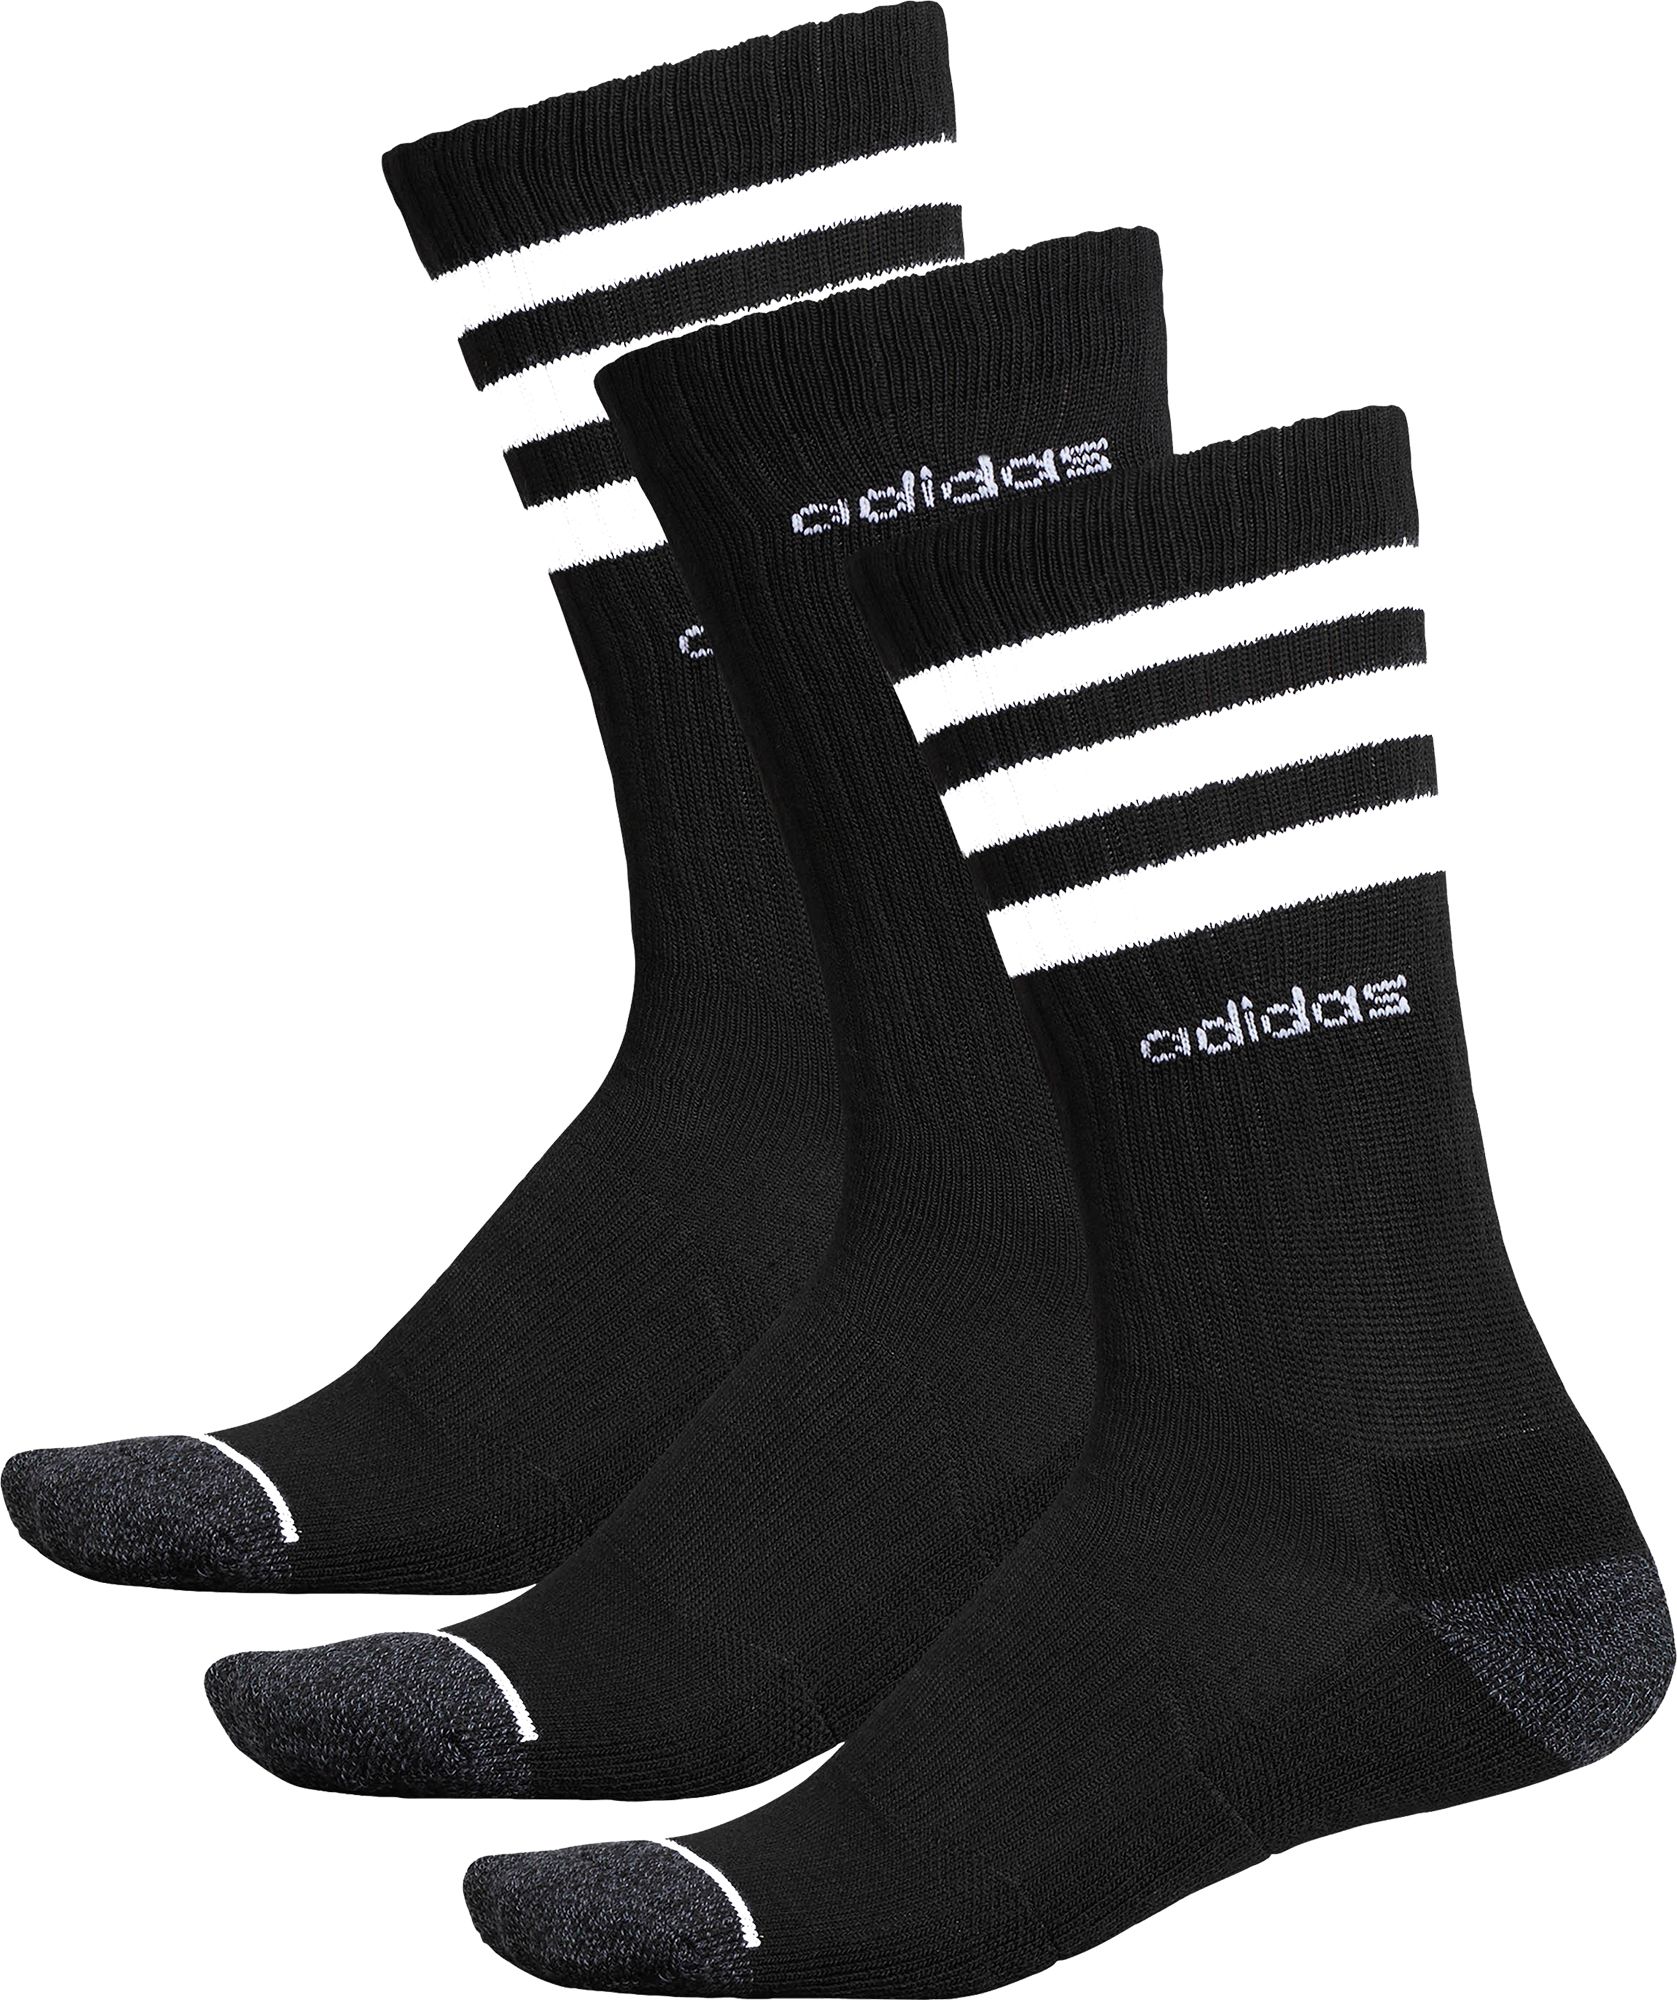 adidas men's black crew socks